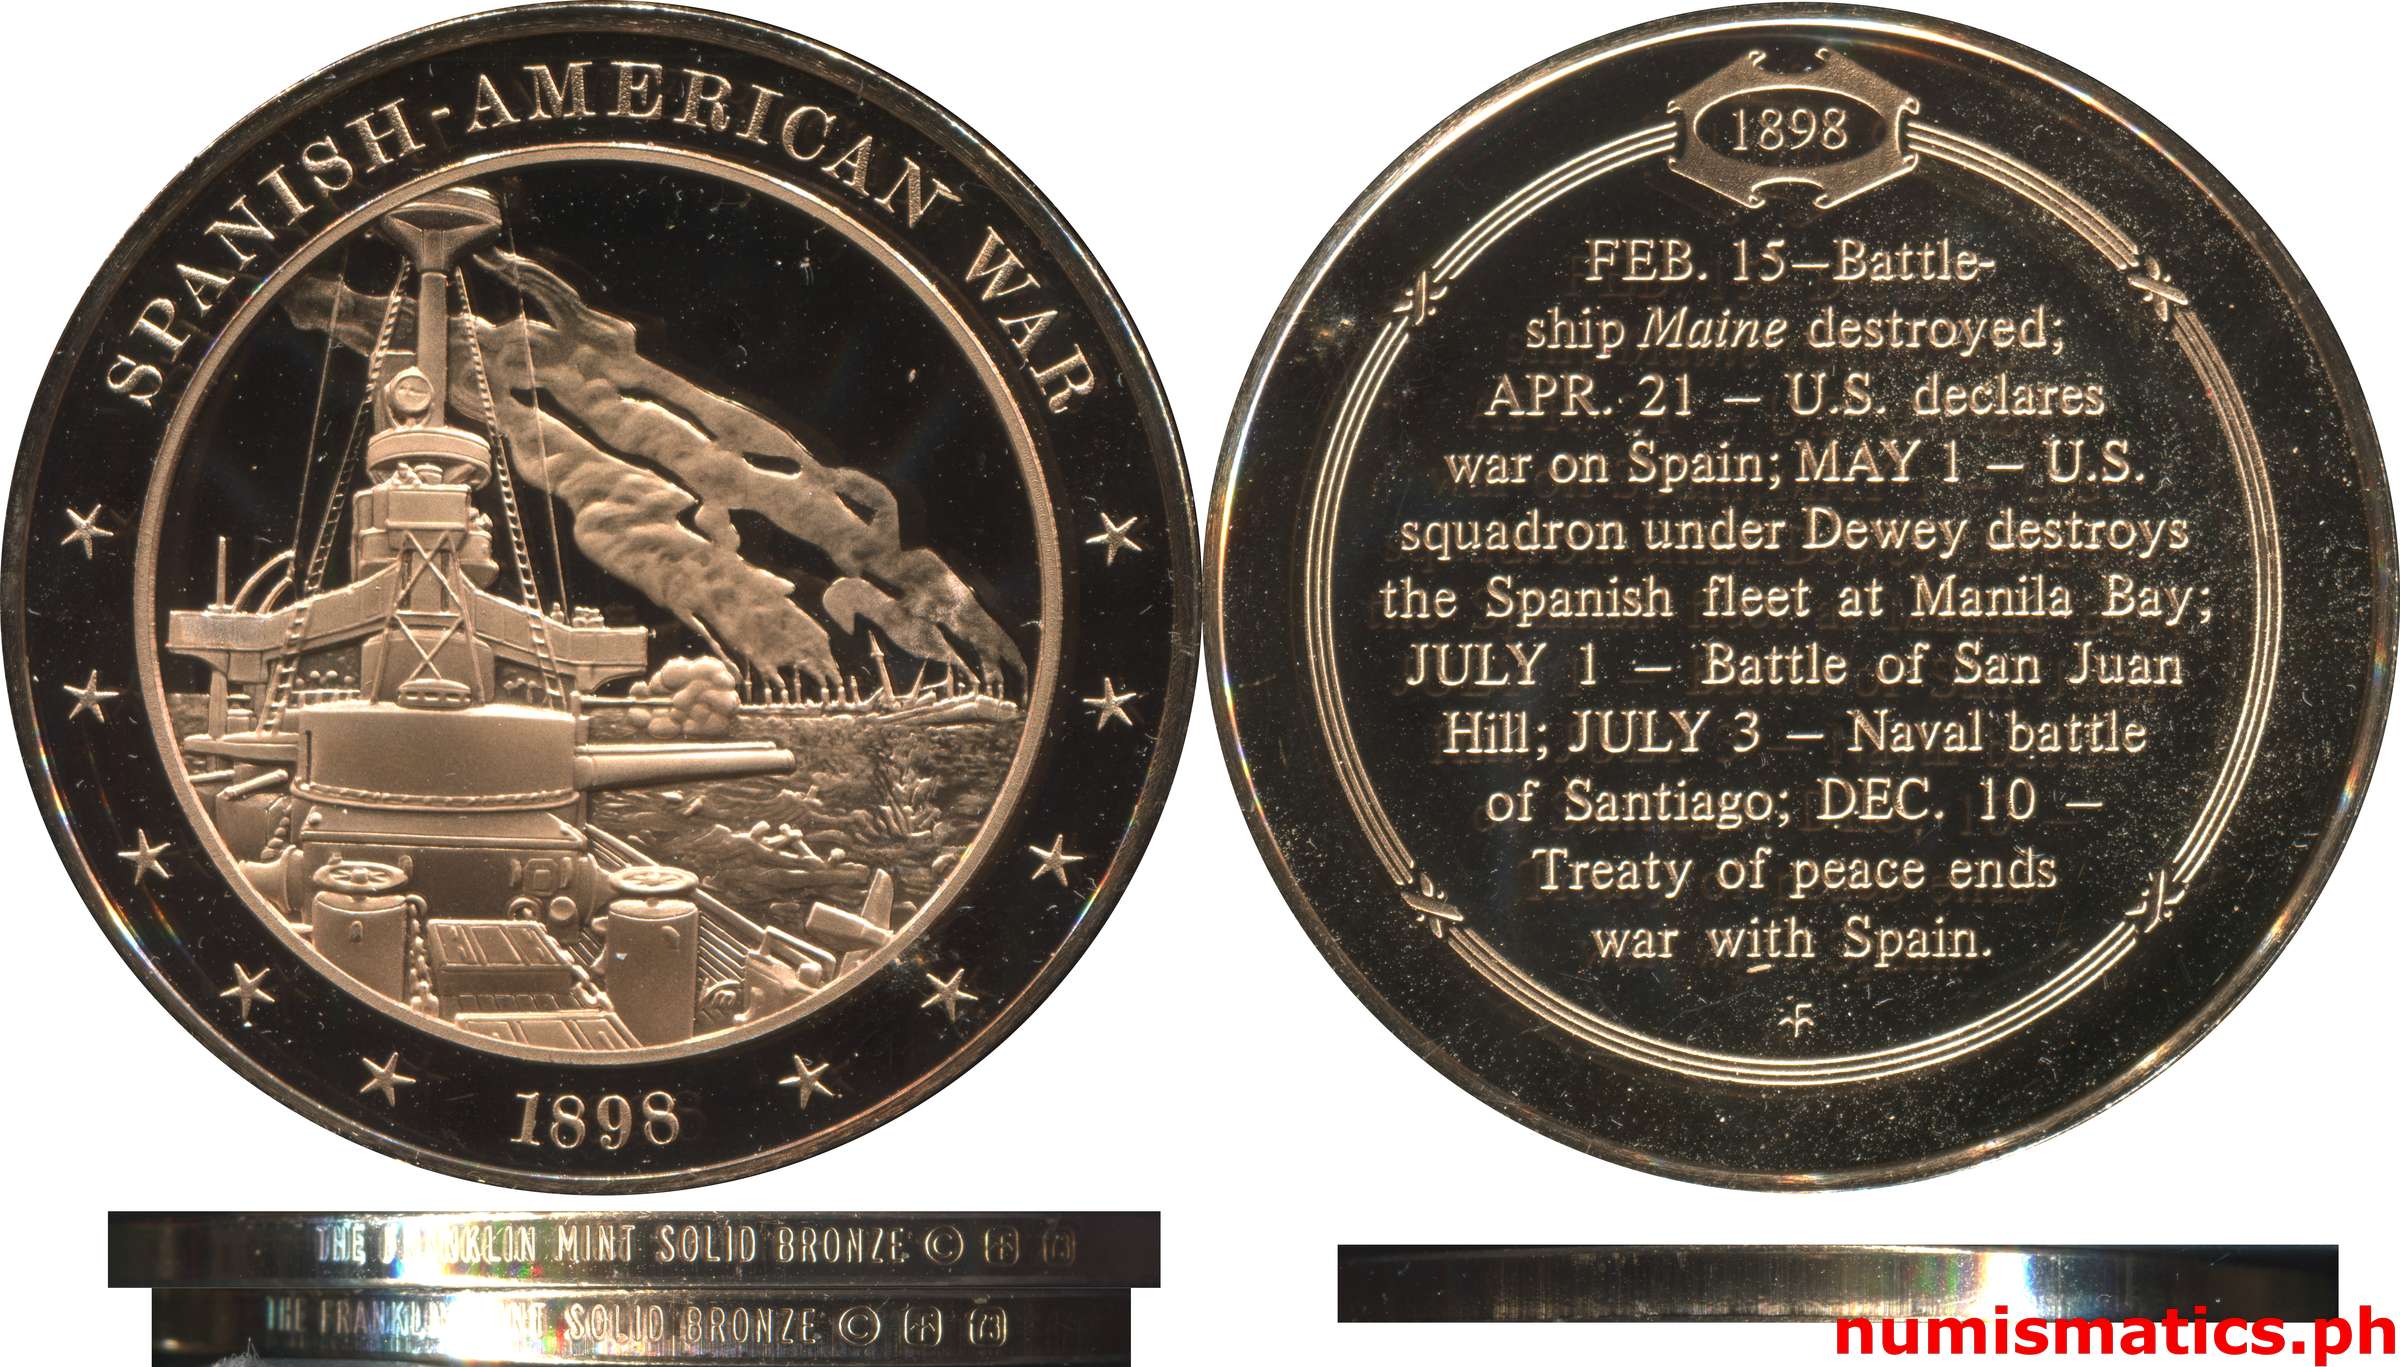 1973 Spanish - American War at Manila Bay Medal